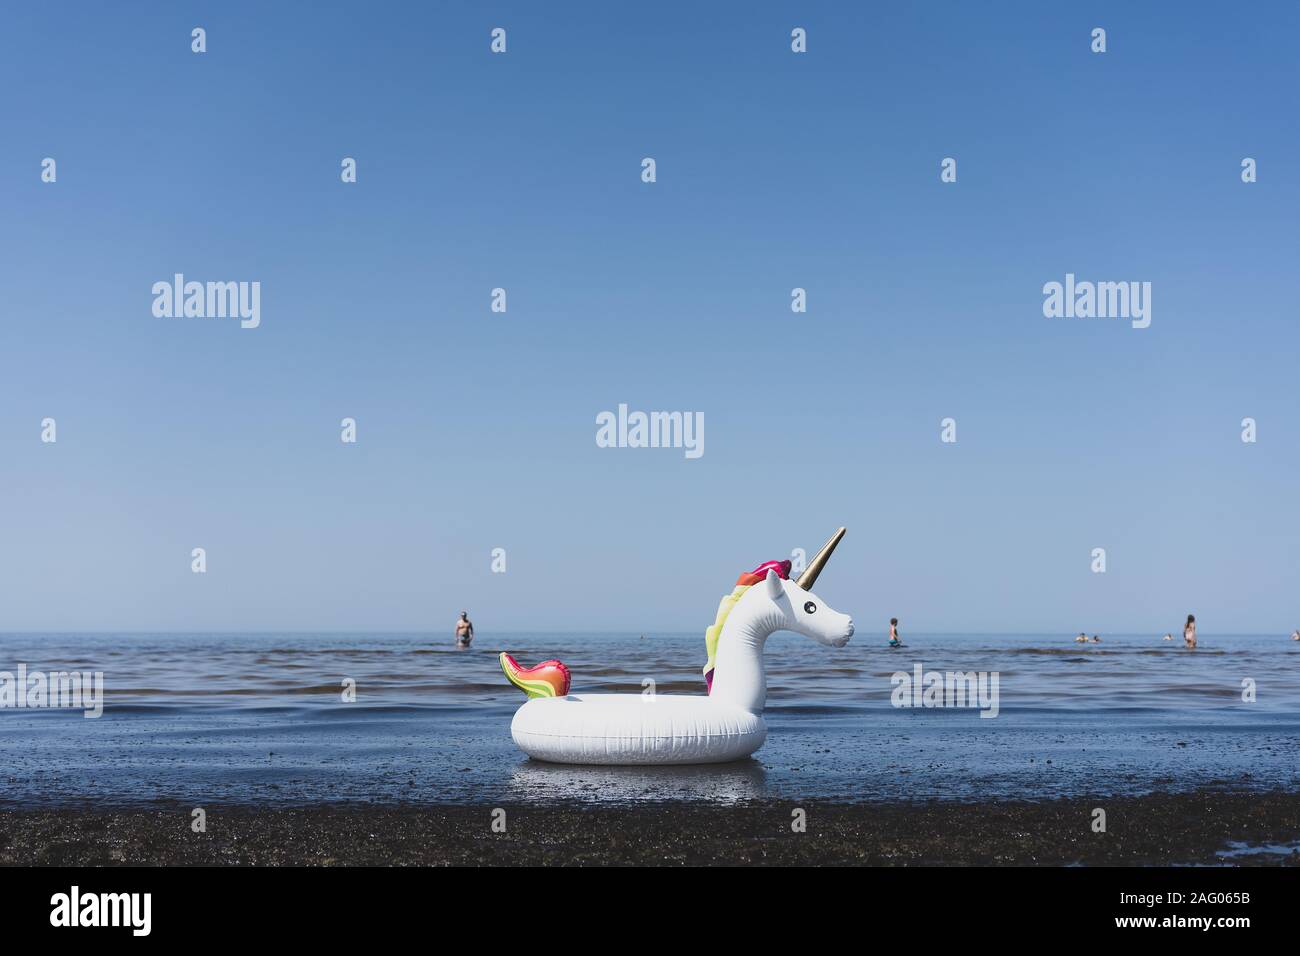 Inflatable unicorn toy on the beach Stock Photo